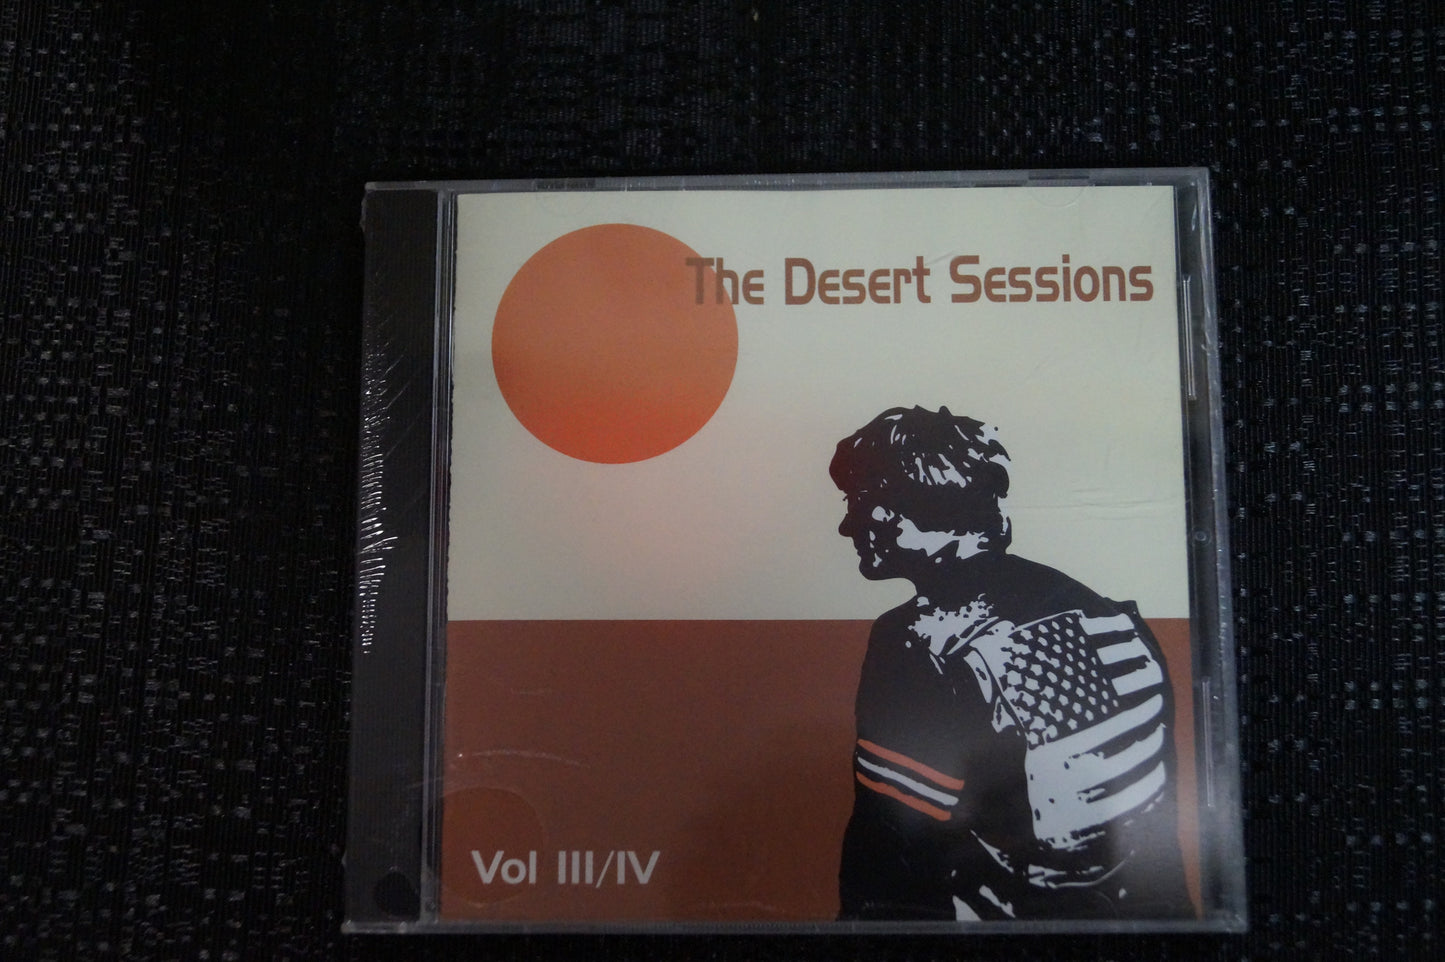 The Desert Sessions Vol III/IV 1998 CD Art By Kozik